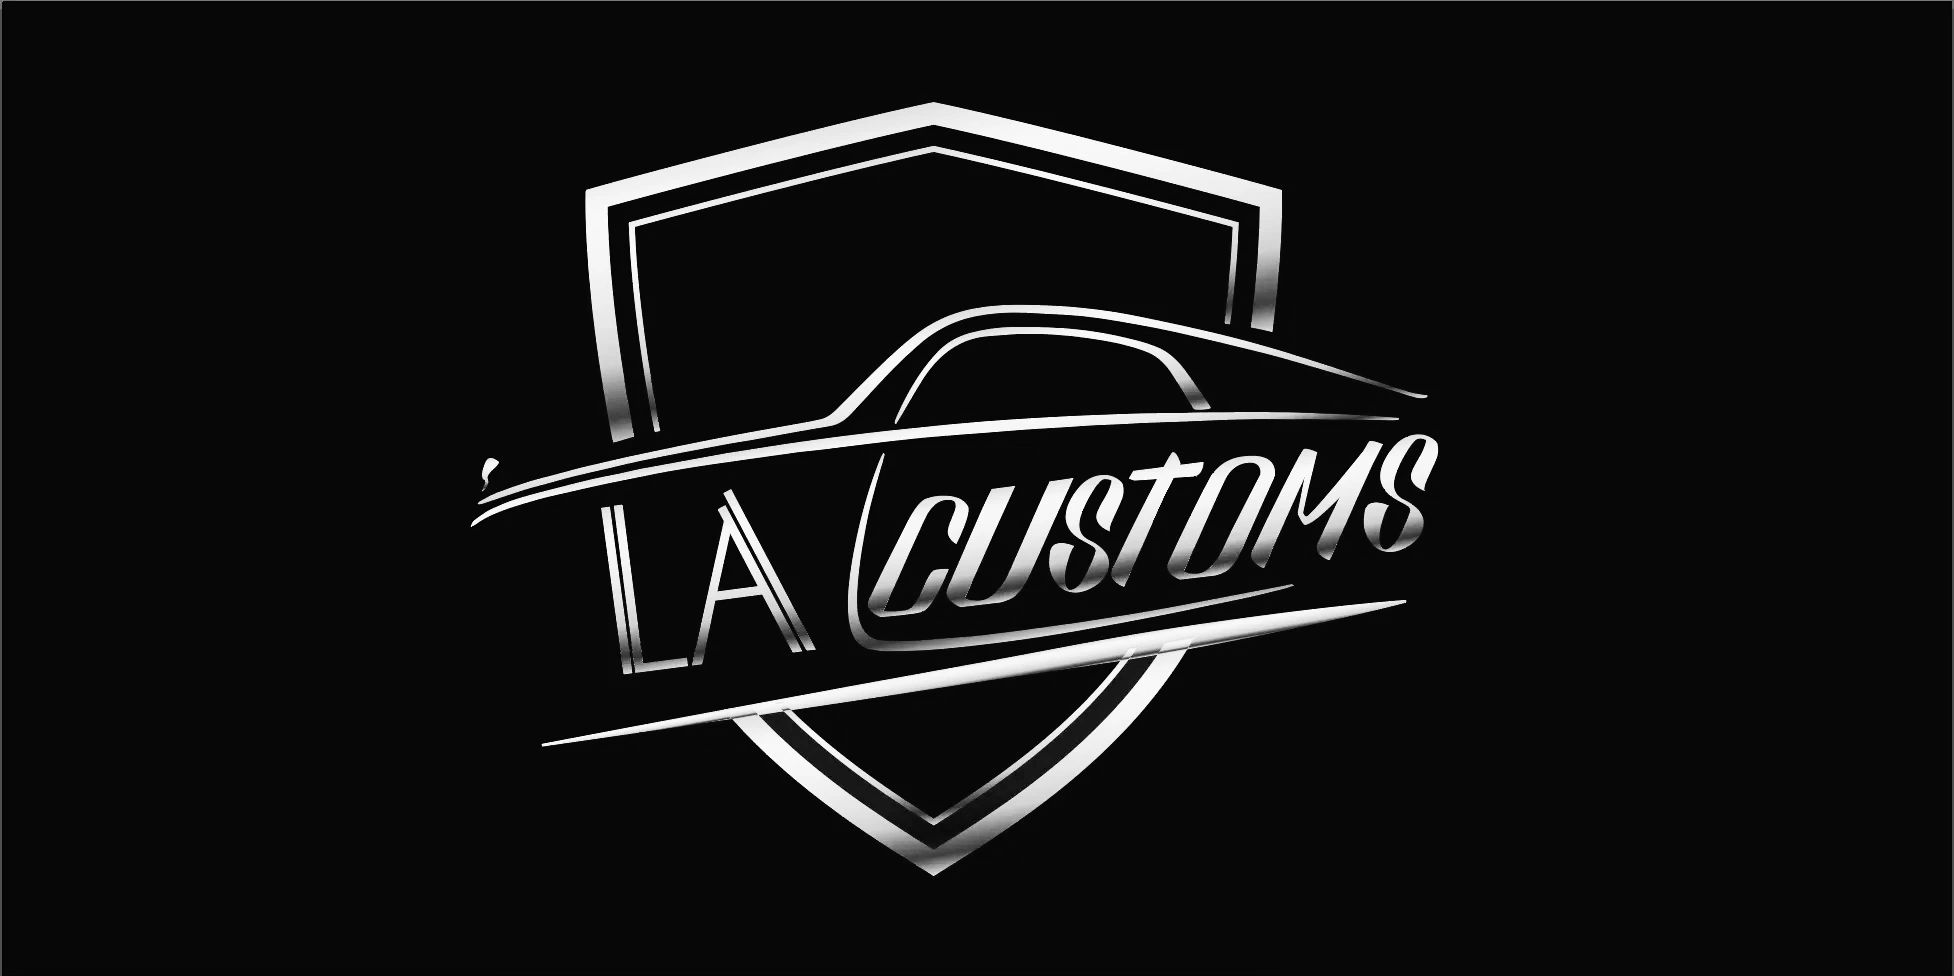 LA CUSTOMS INC - Auto Body Shop, 24hr Tow Truck, Auto Shops